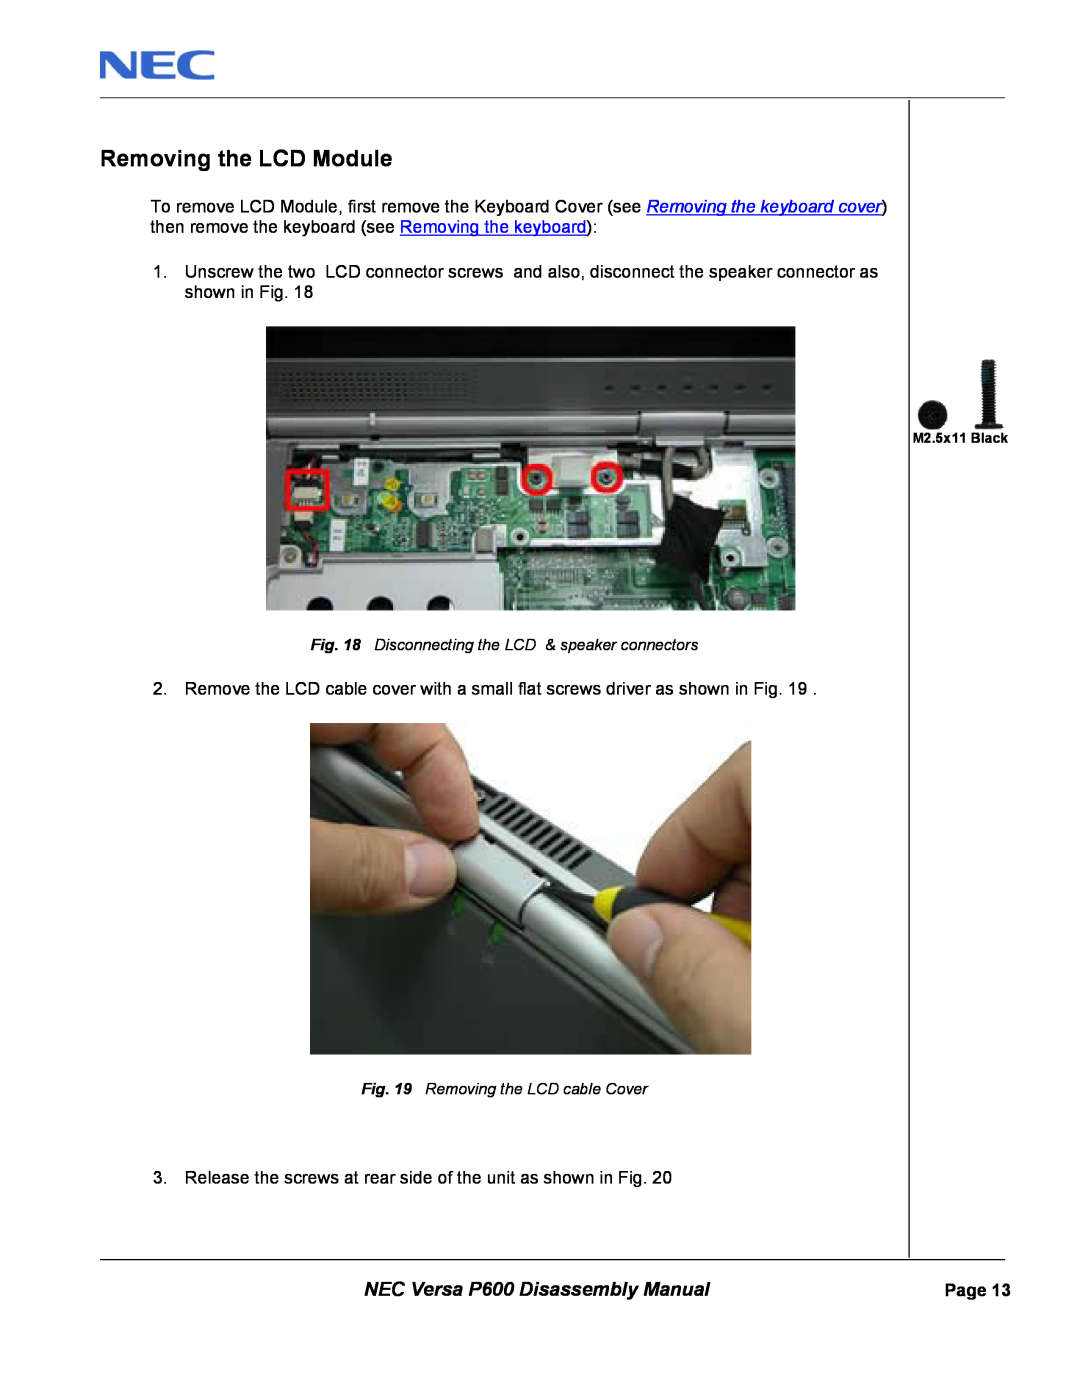 NEC manual Removing the LCD Module, NEC Versa P600 Disassembly Manual, Removing the LCD cable Cover 